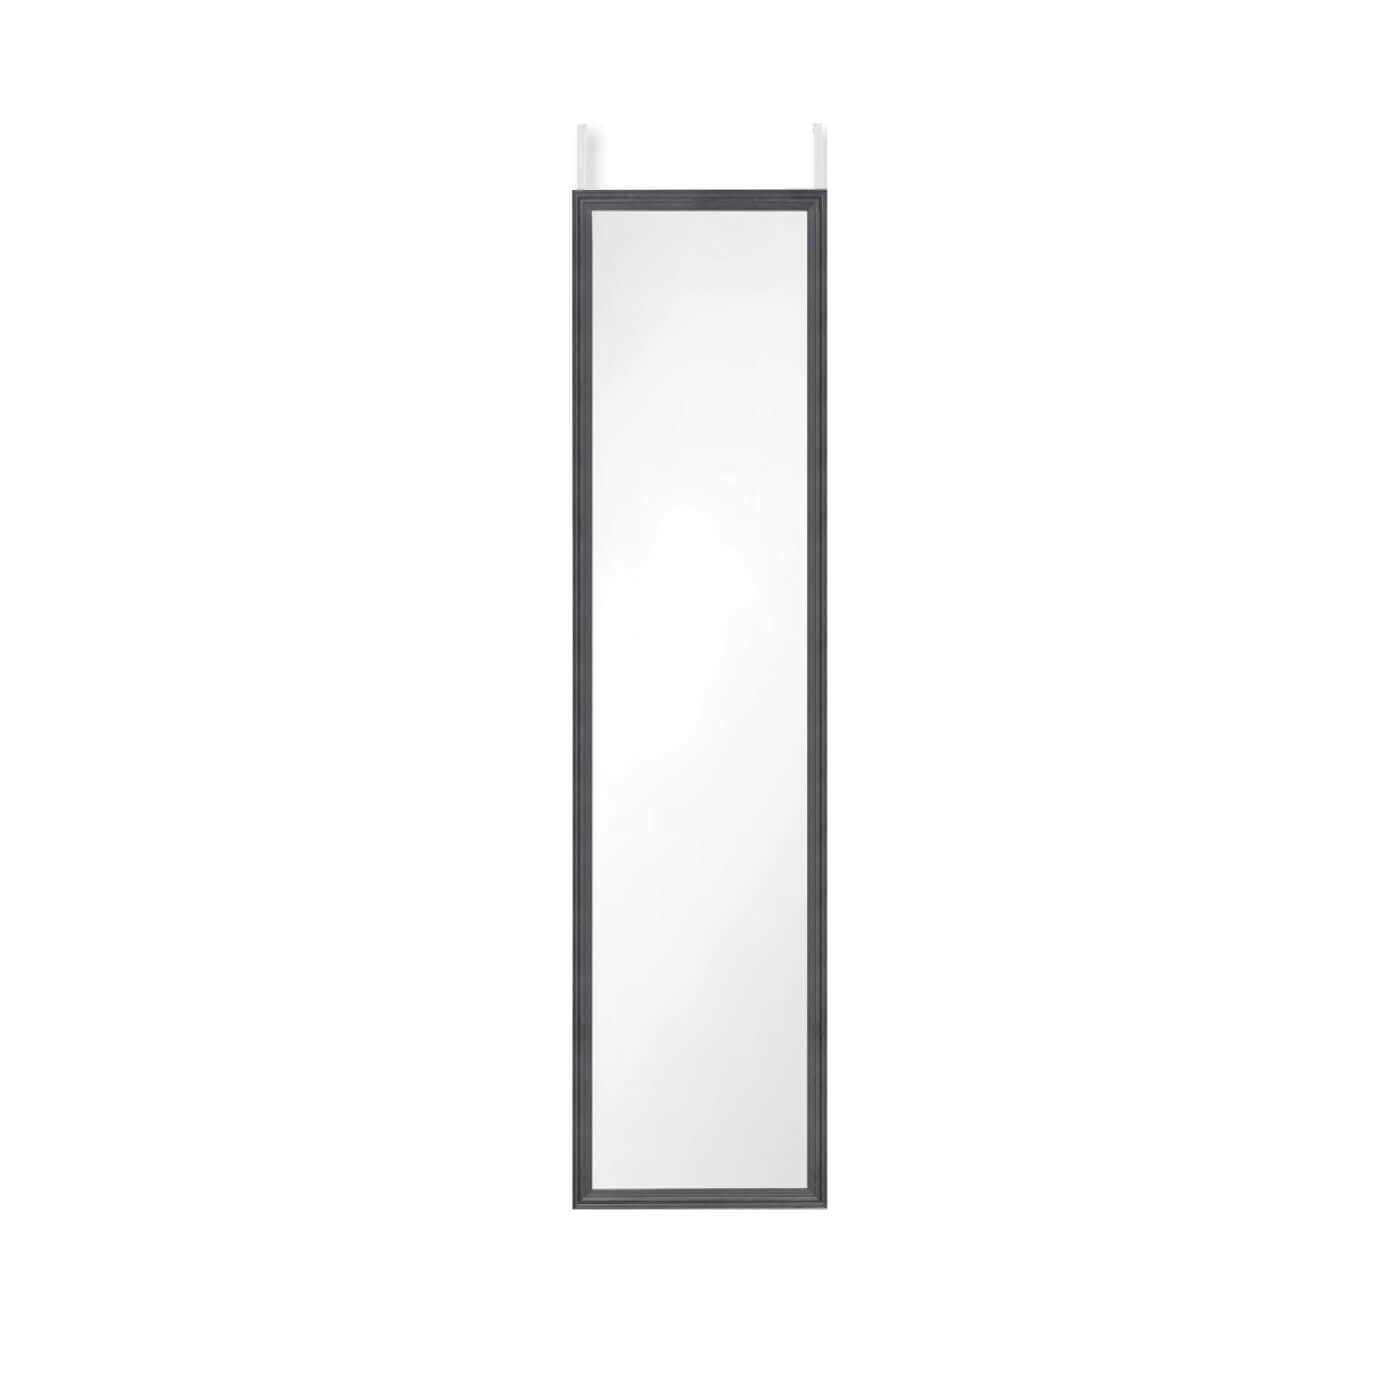 Cauti o oglinda BEA 30x120 neagra, design modern, simplu, pentru living sau dormitor?